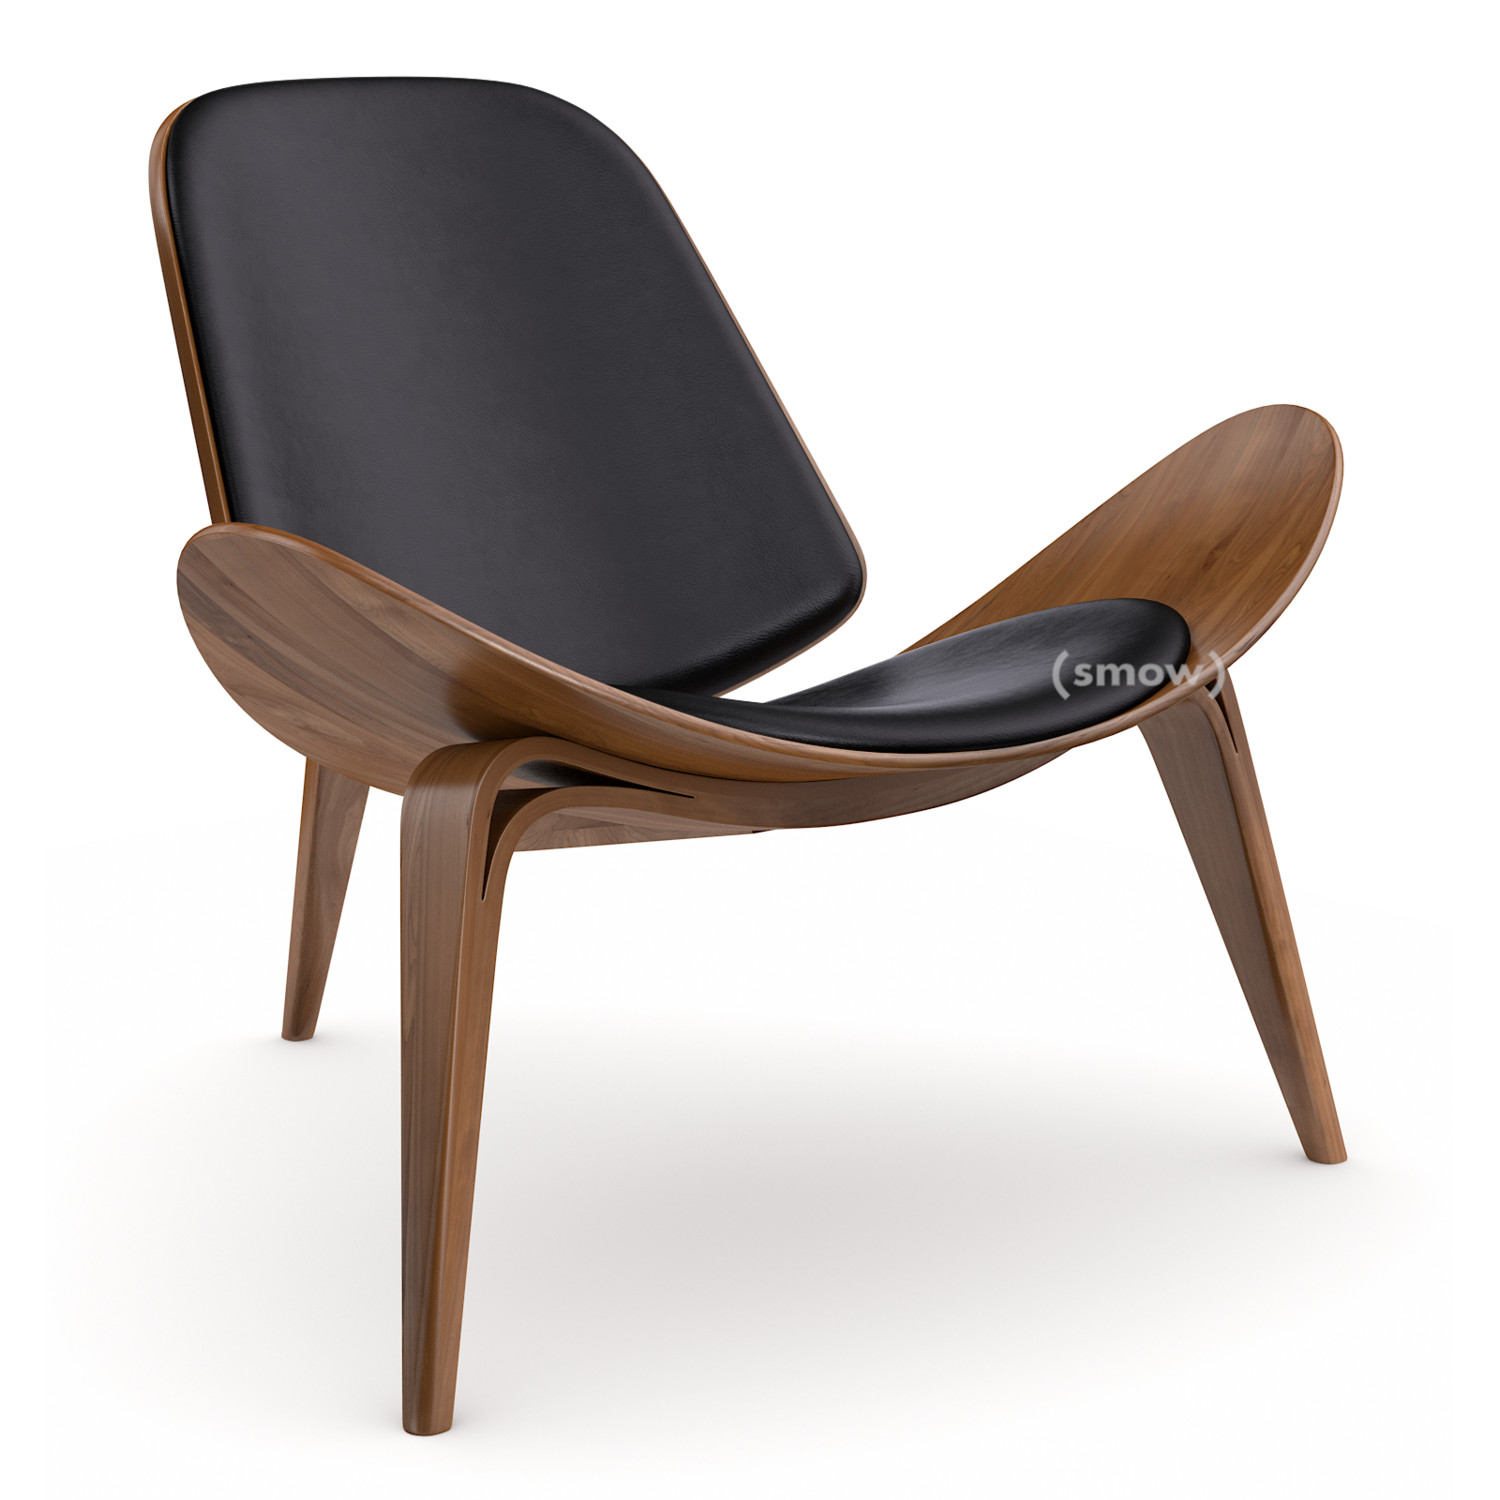 Carl Hansen & Søn CH07 Shell Chair, Lacquered walnut, Leather black by Hans J. Wegner, 1963 Designer furniture by smow.com